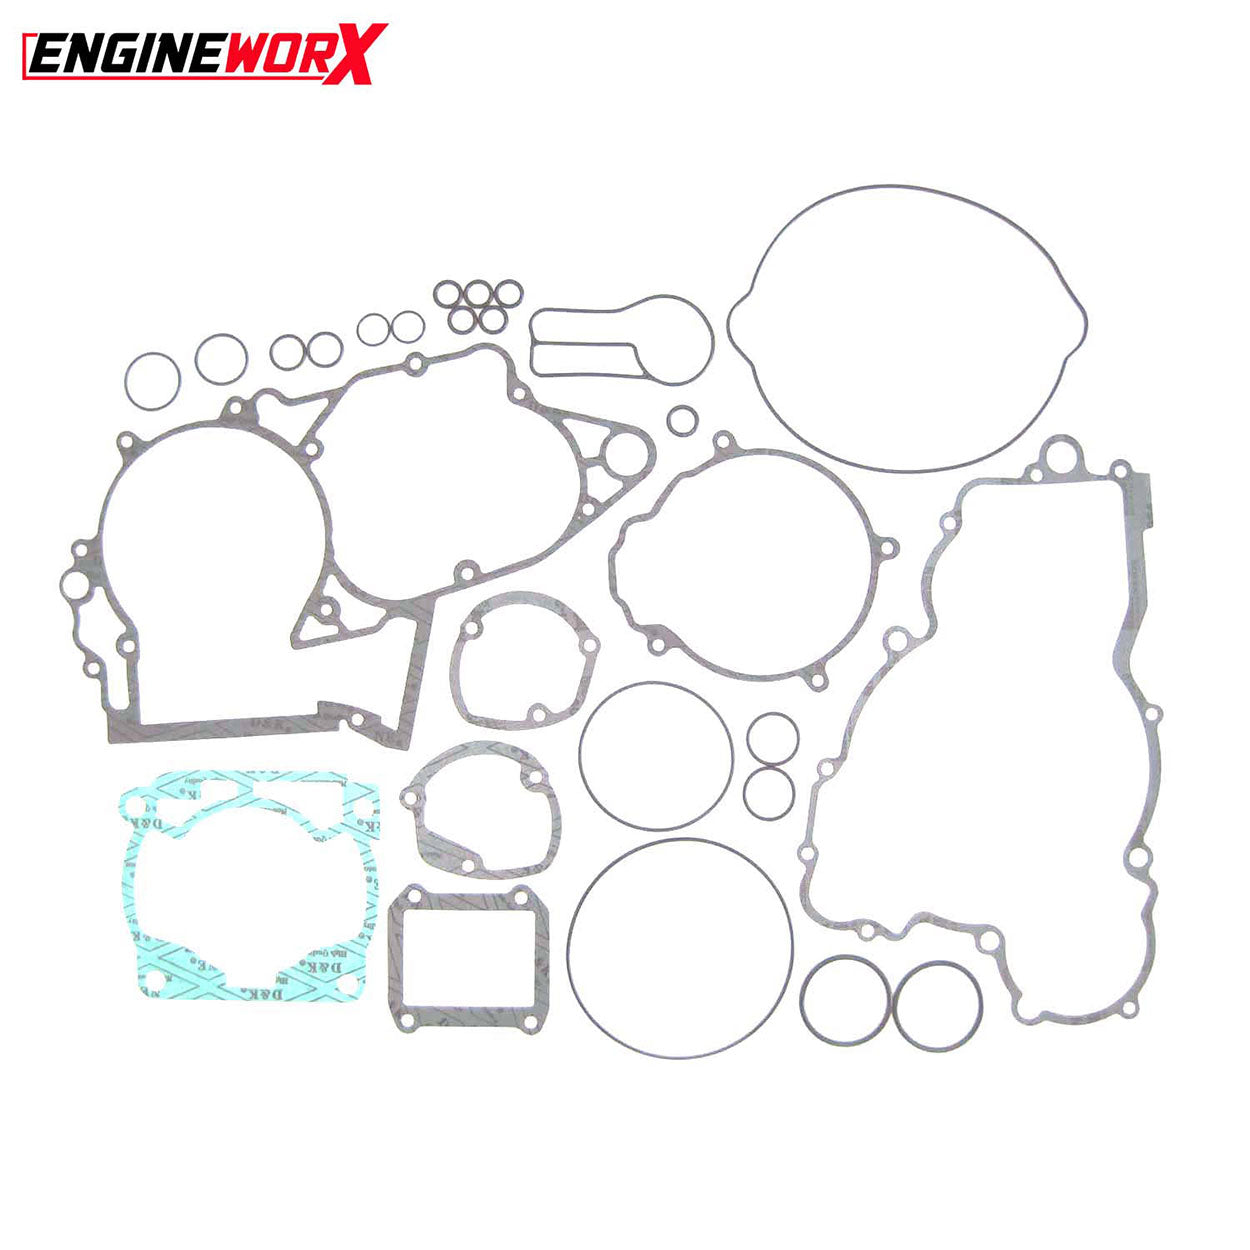 Engineworx Full Gasket Kit KTM SX 250 05-06, EXC 250 05-06